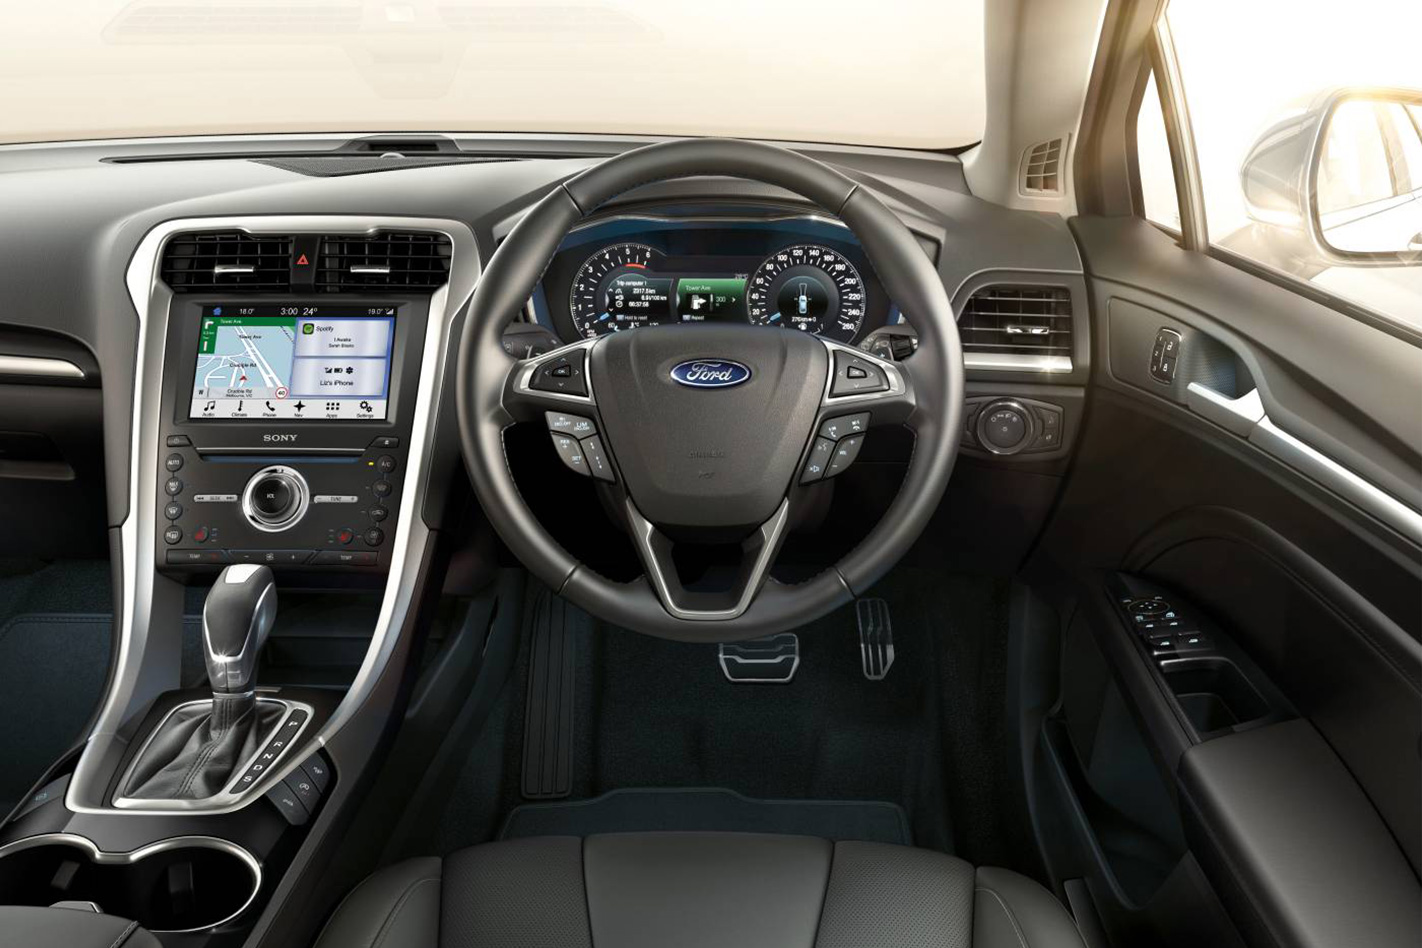 2018 Ford Mondeo interior